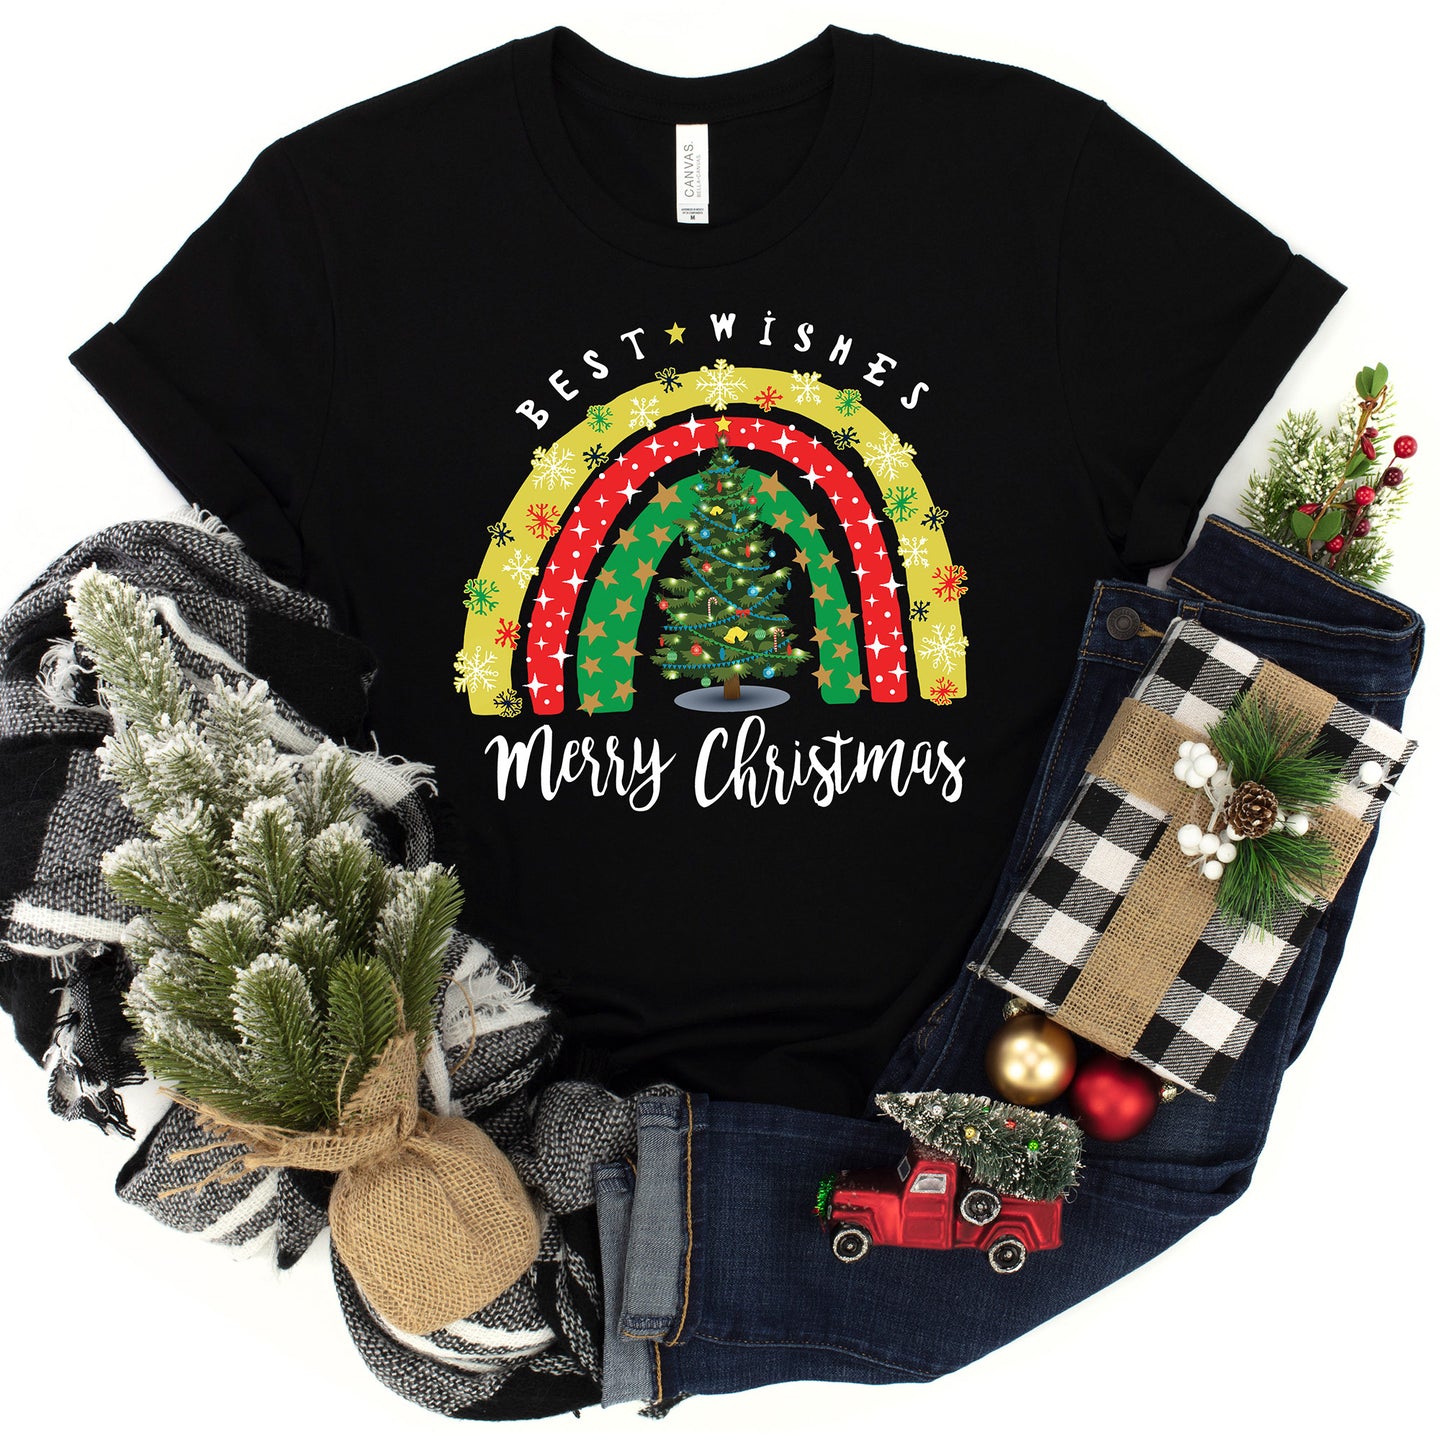 Best Wishes Christmas T-shirt, Seasonal Tee